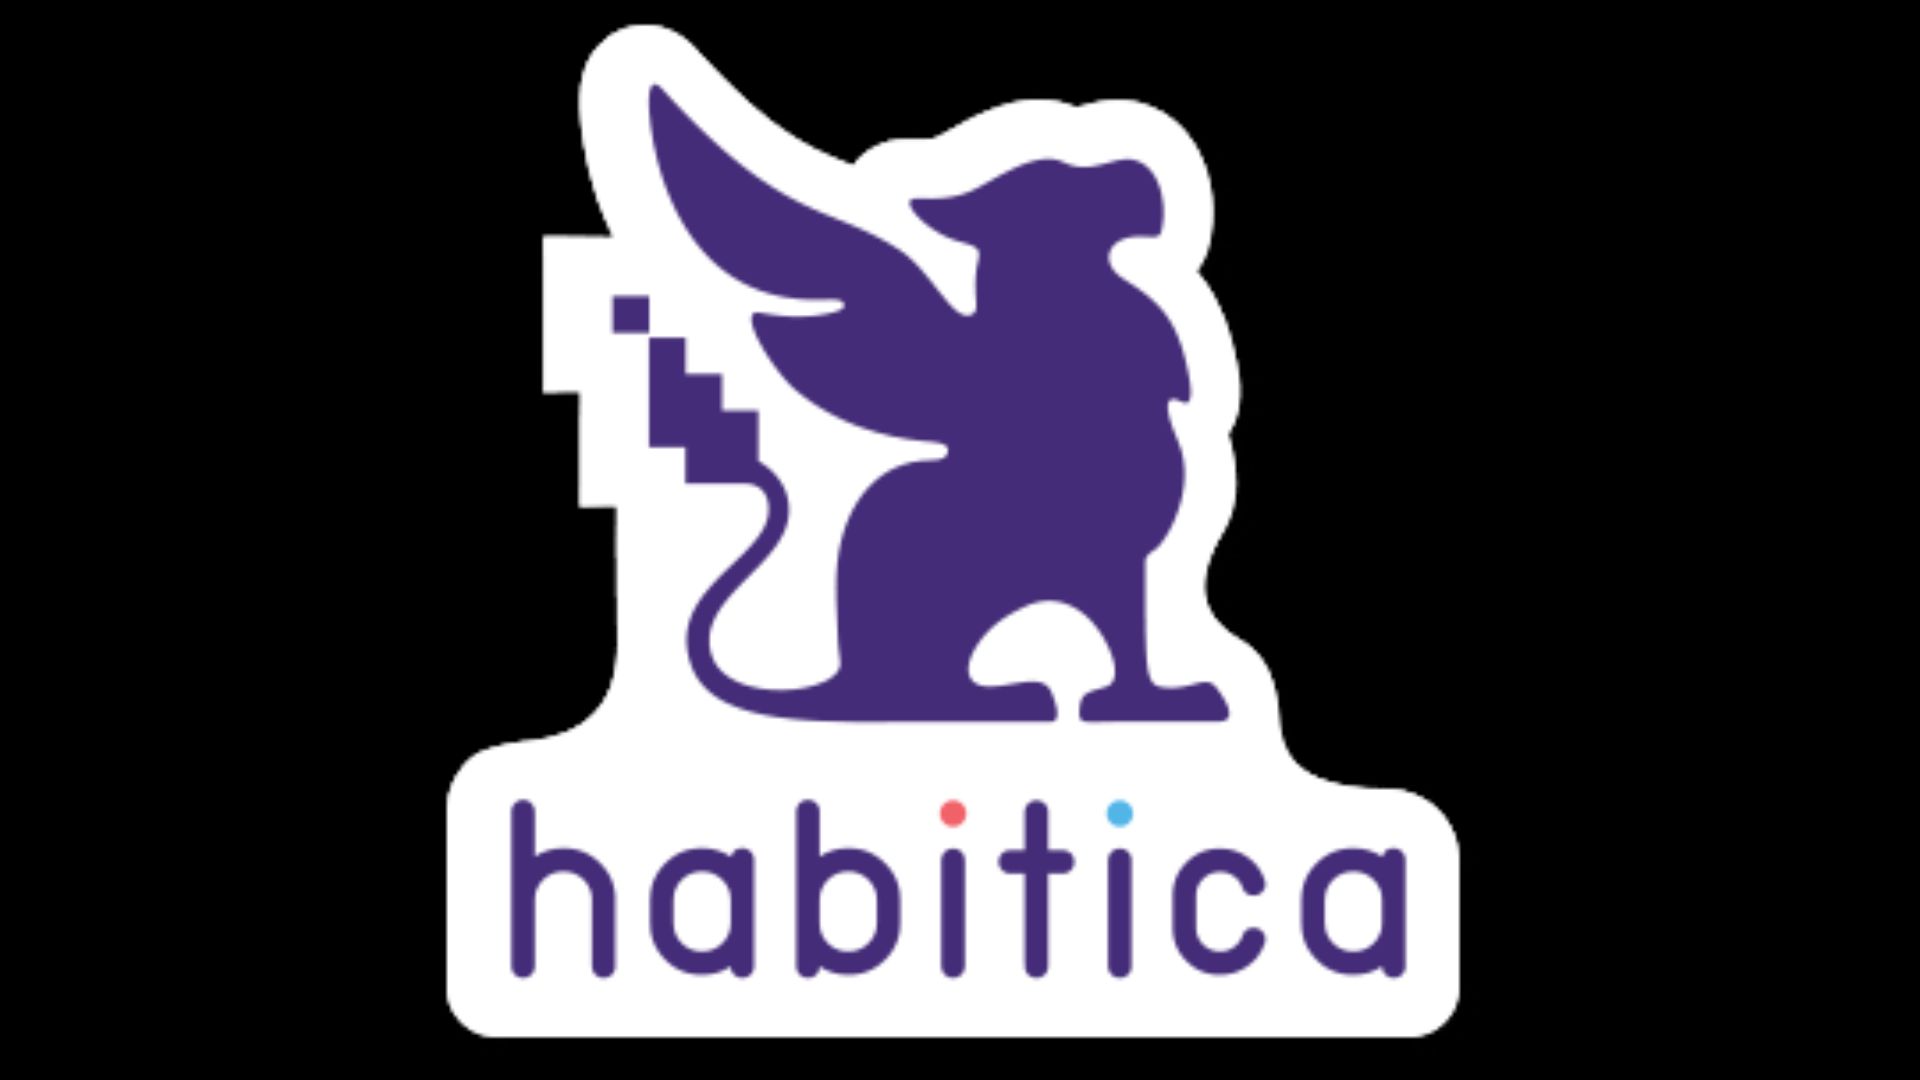 Habitica Logo With Black Background